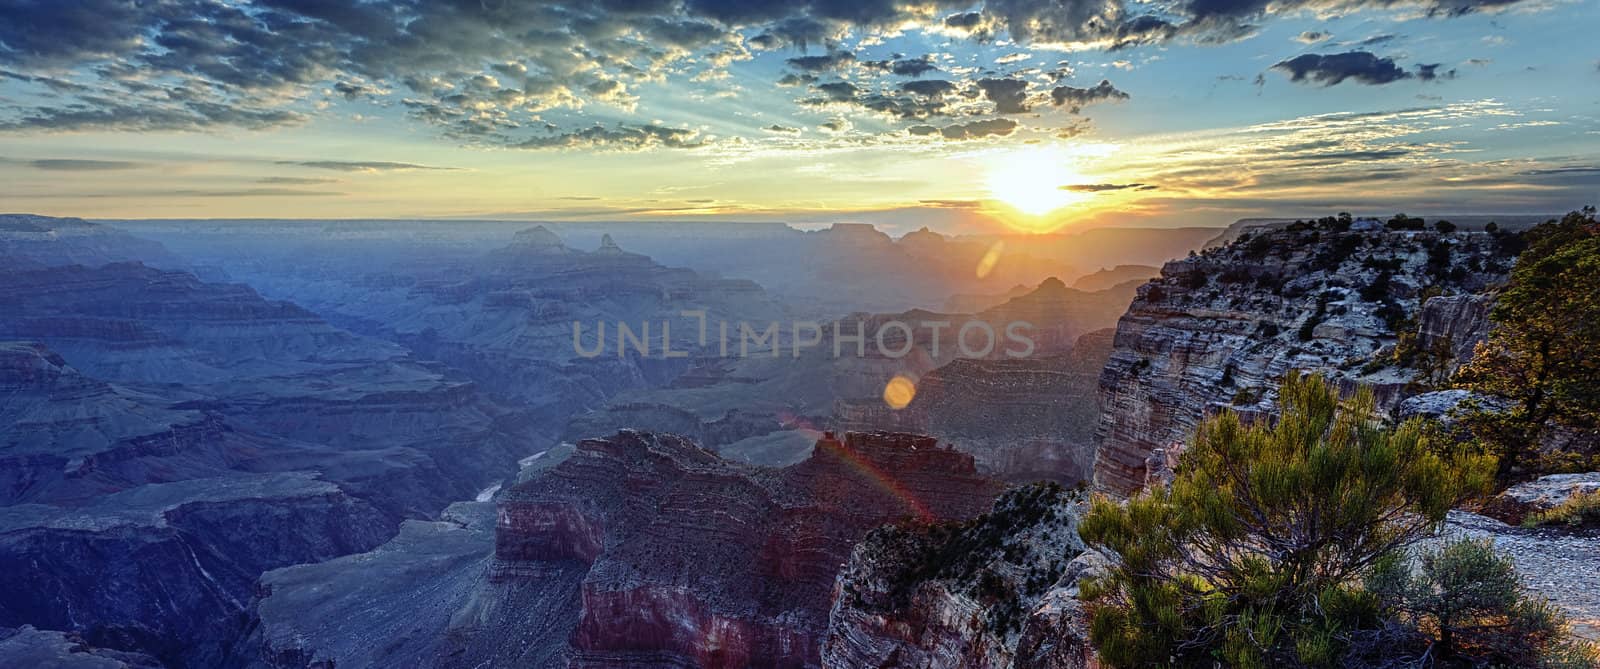 panoramic view of Grand Canyon at sunrise by vwalakte